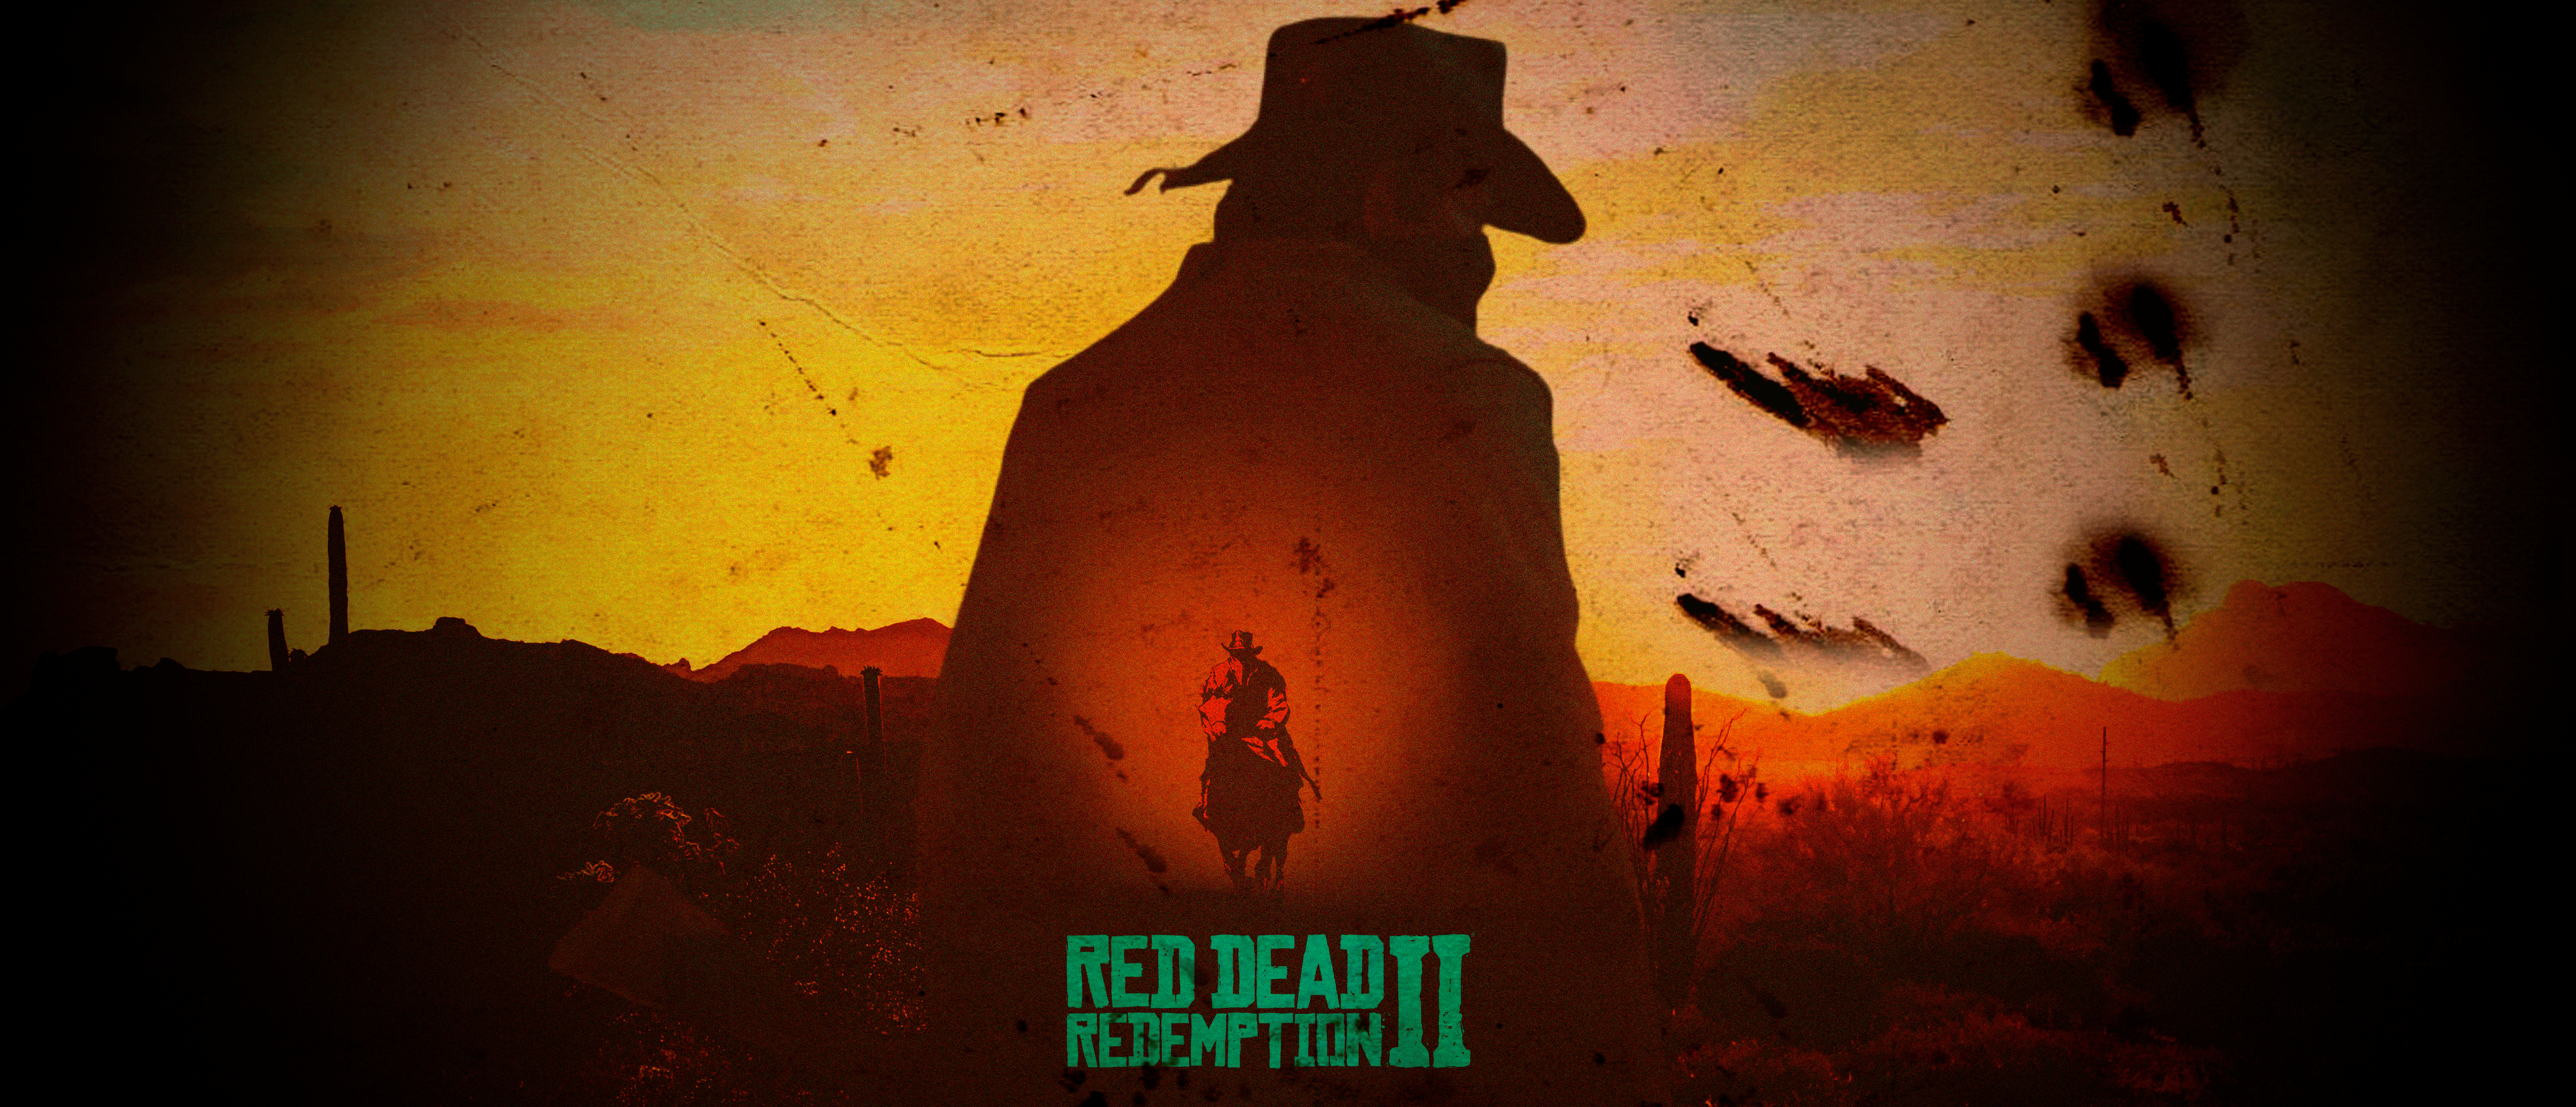 Red Dead Redemption 2 Red Dead Redemption Rockstar Games Arthur Morgan Video Games 5120x2200